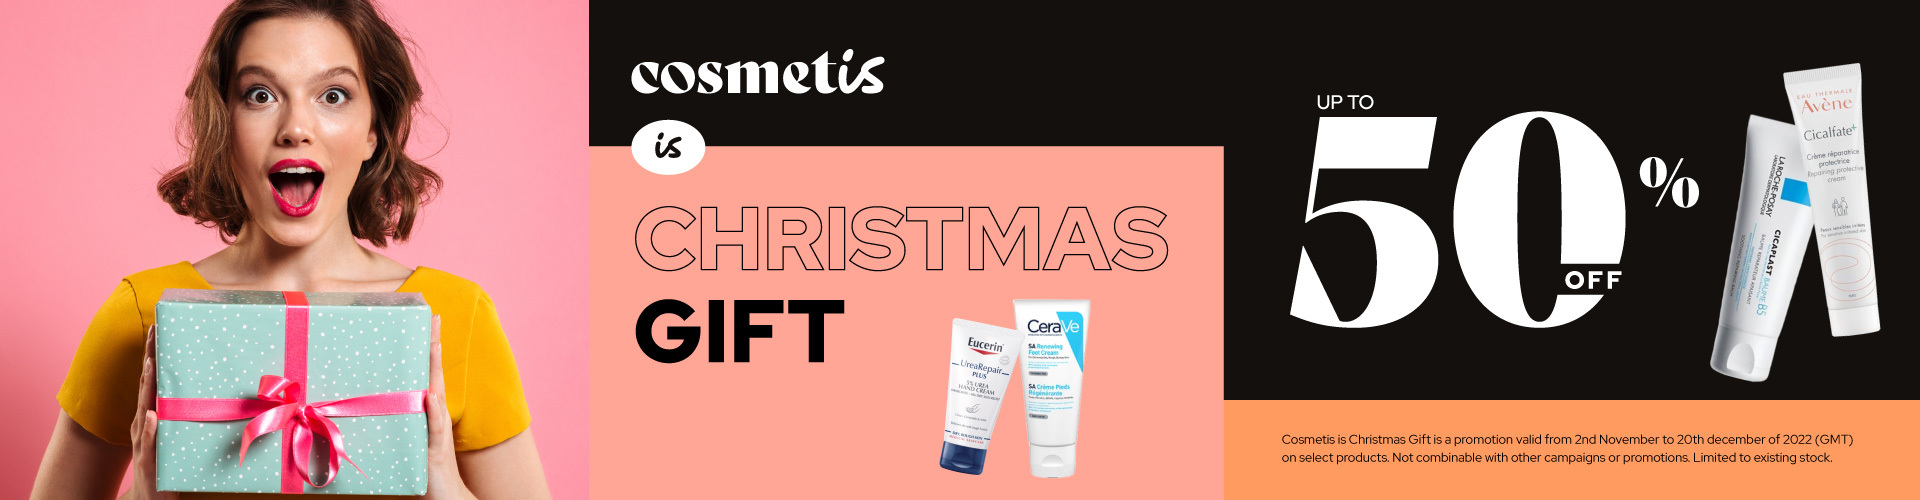 Cosmetis is Christmas Gift